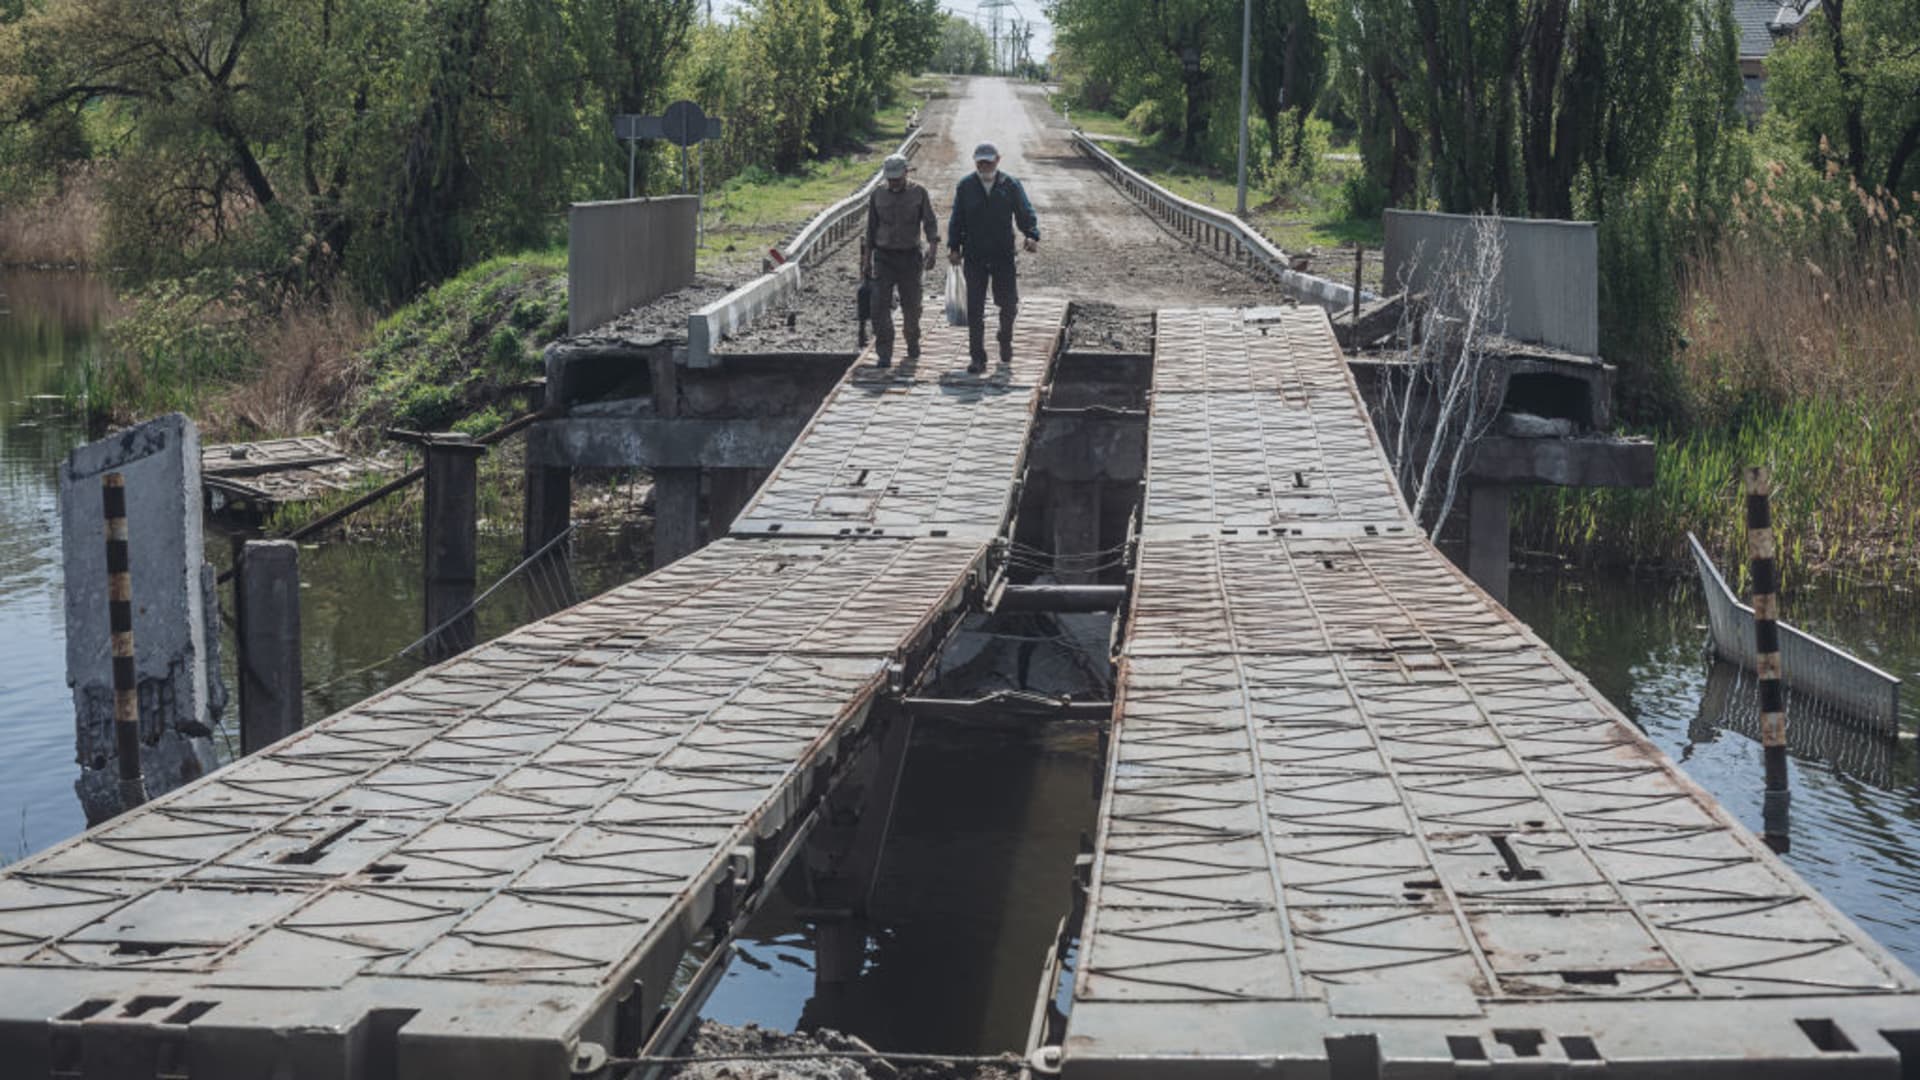 KHARKIV, UKRAINE - MAY 8: Two men cross a destroyed bridge on the outskirts of Kharkiv, Ukraine, 8 May 2022. (Photo by Diego Herrera Carcedo/Anadolu Agency via Getty Images)